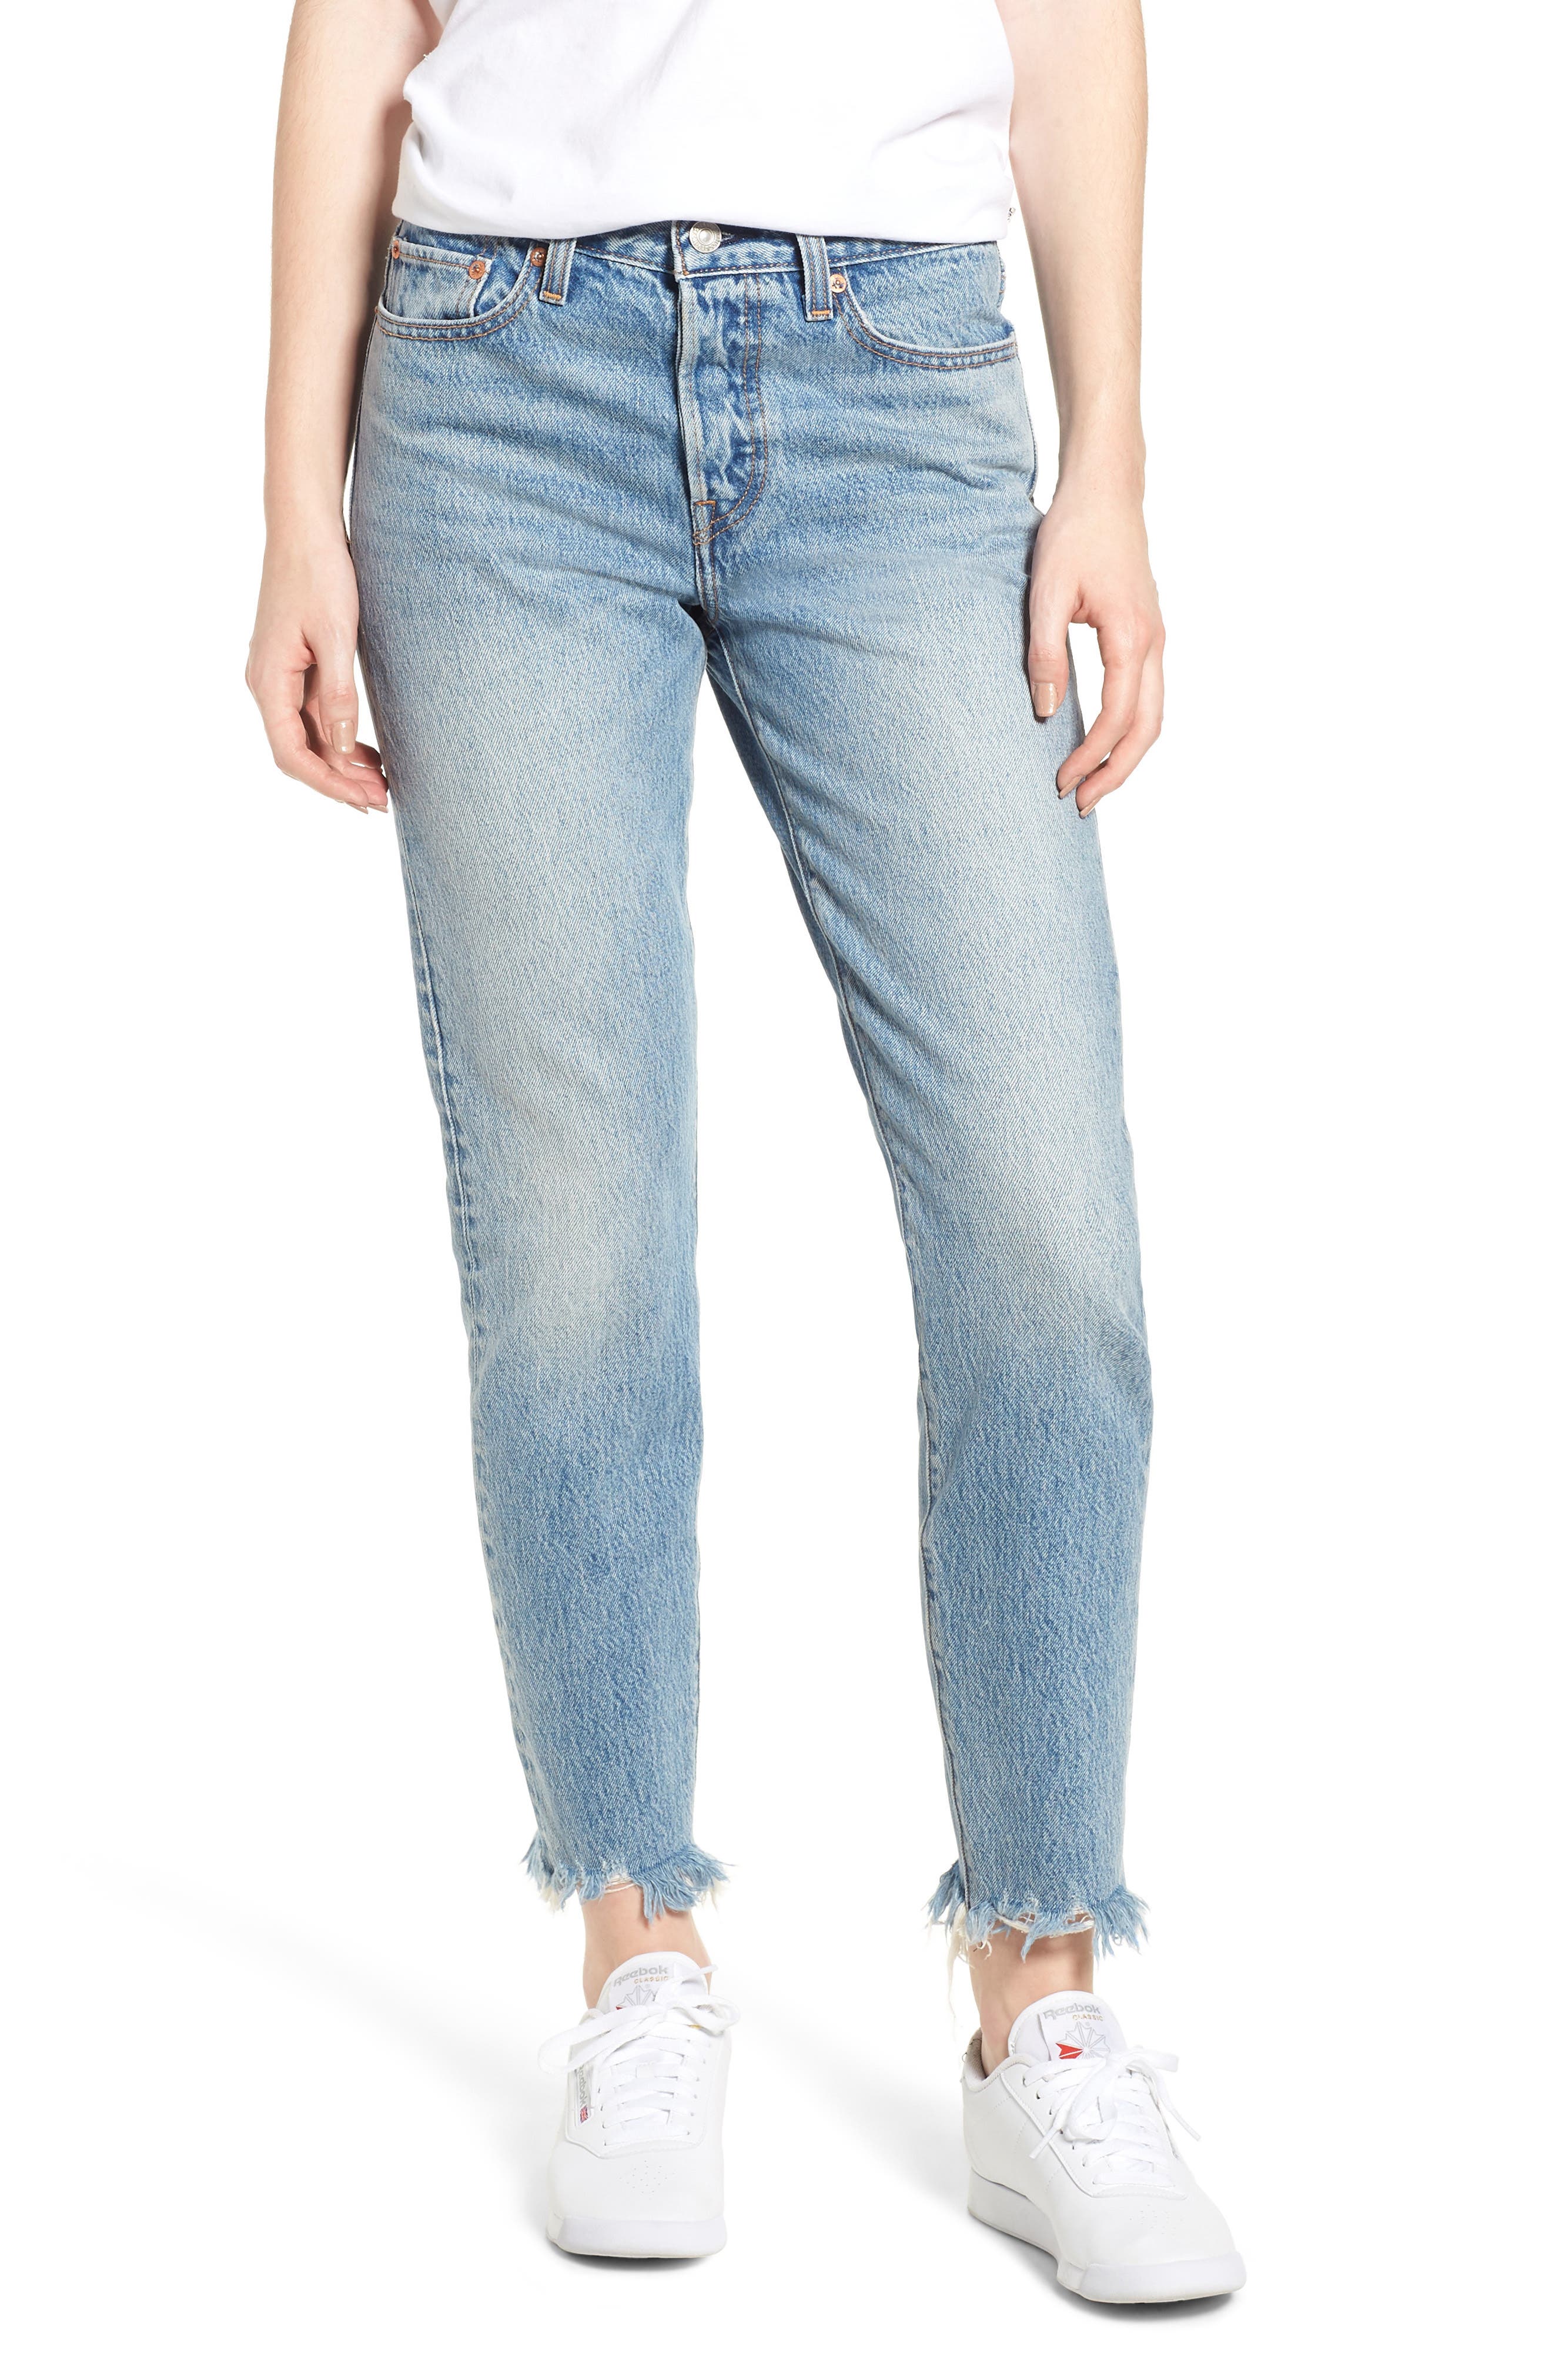 levi's wedgie icon selvedge jeans